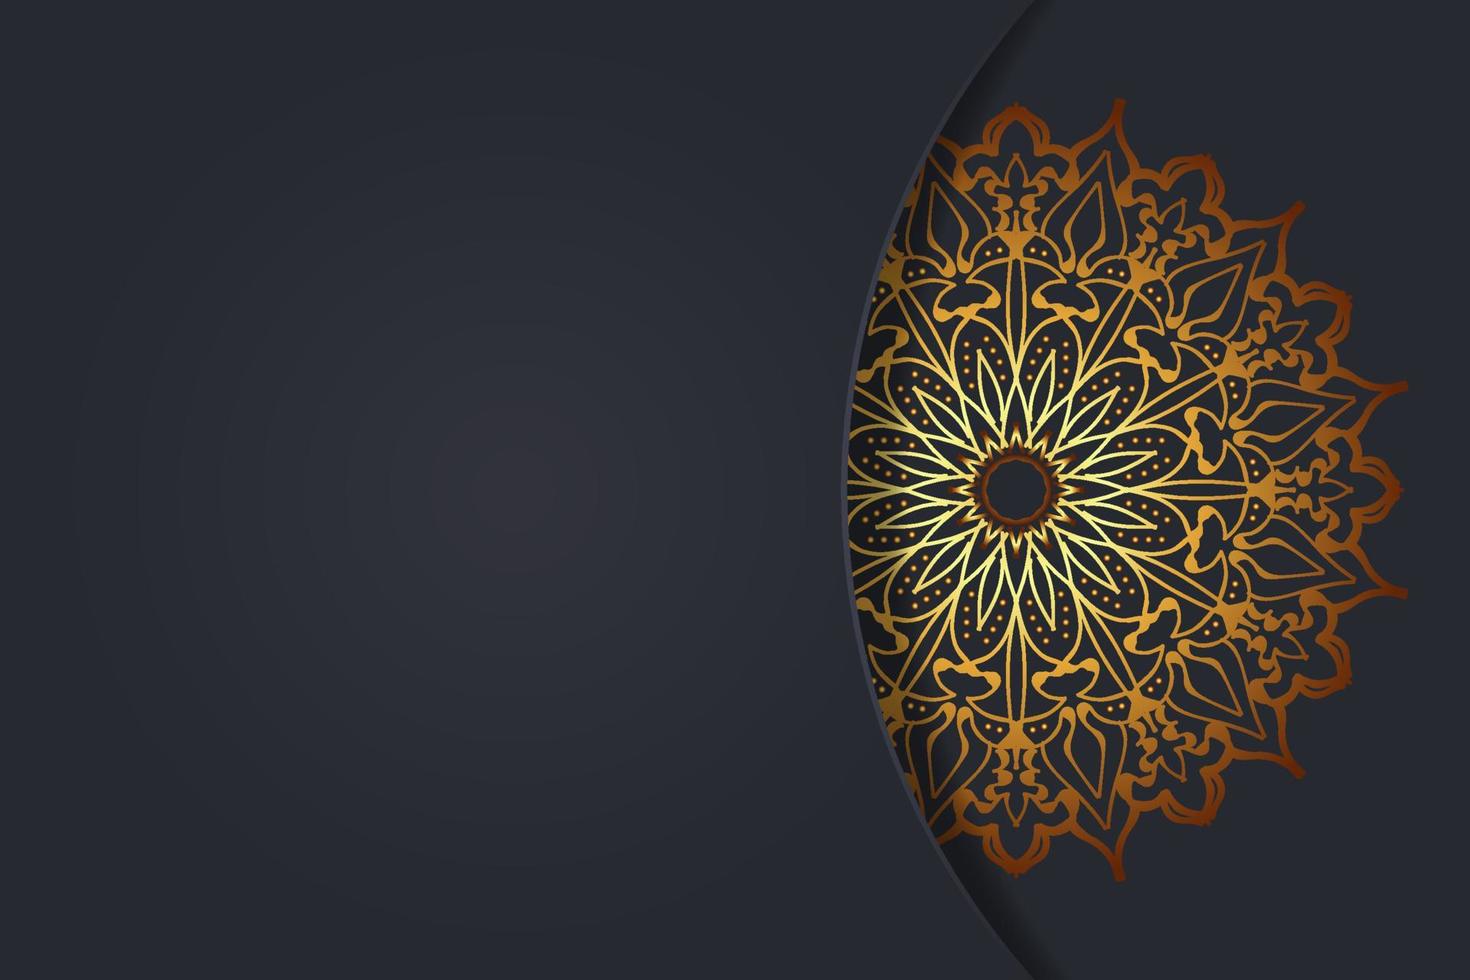 Luxurty mandala style golden pattern background. vector